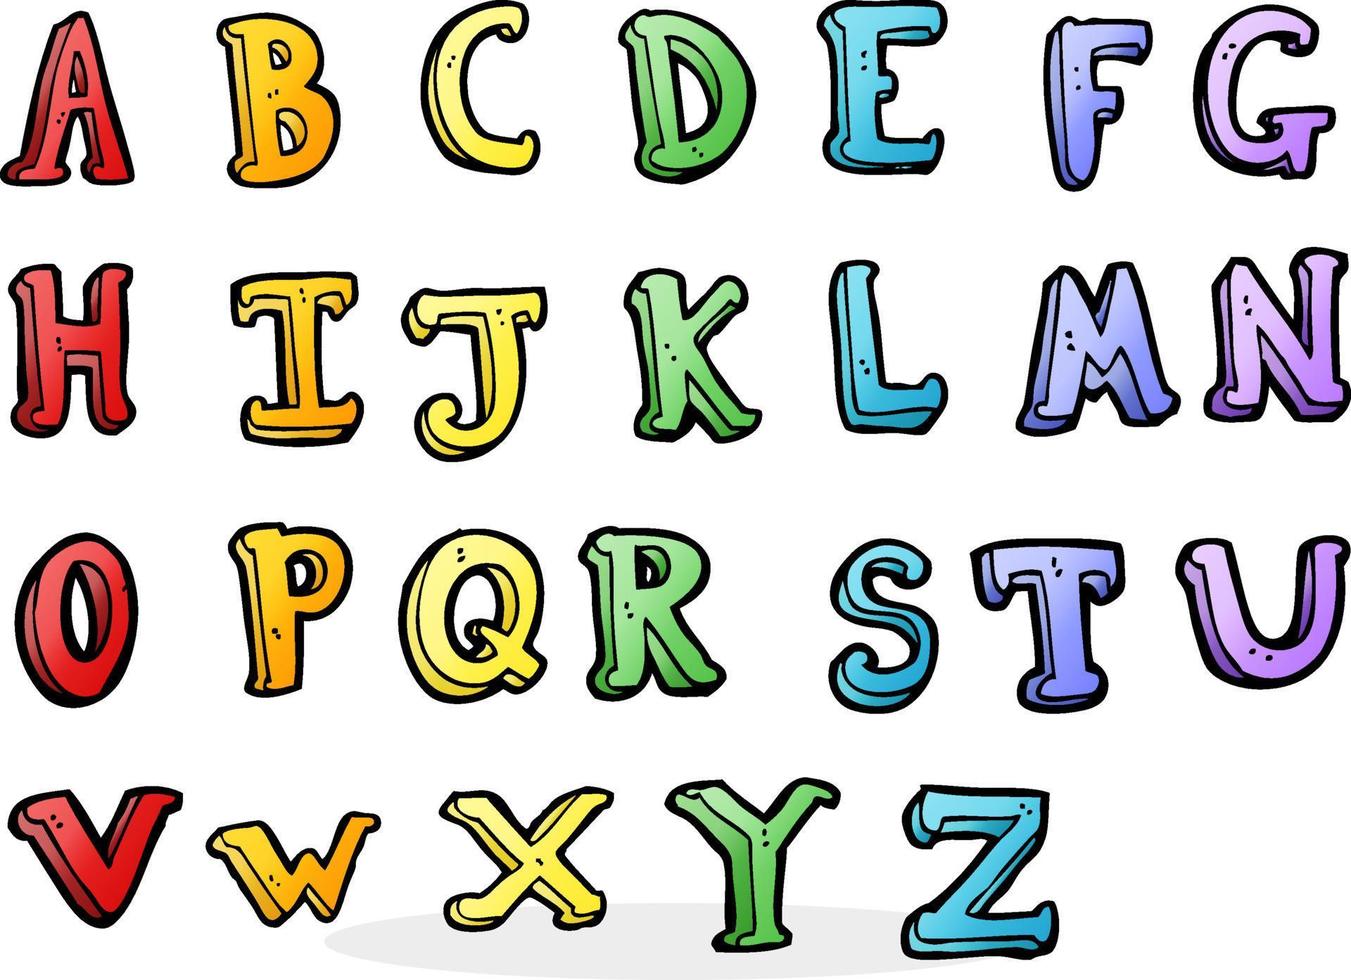 alfabeto de desenho animado vetor